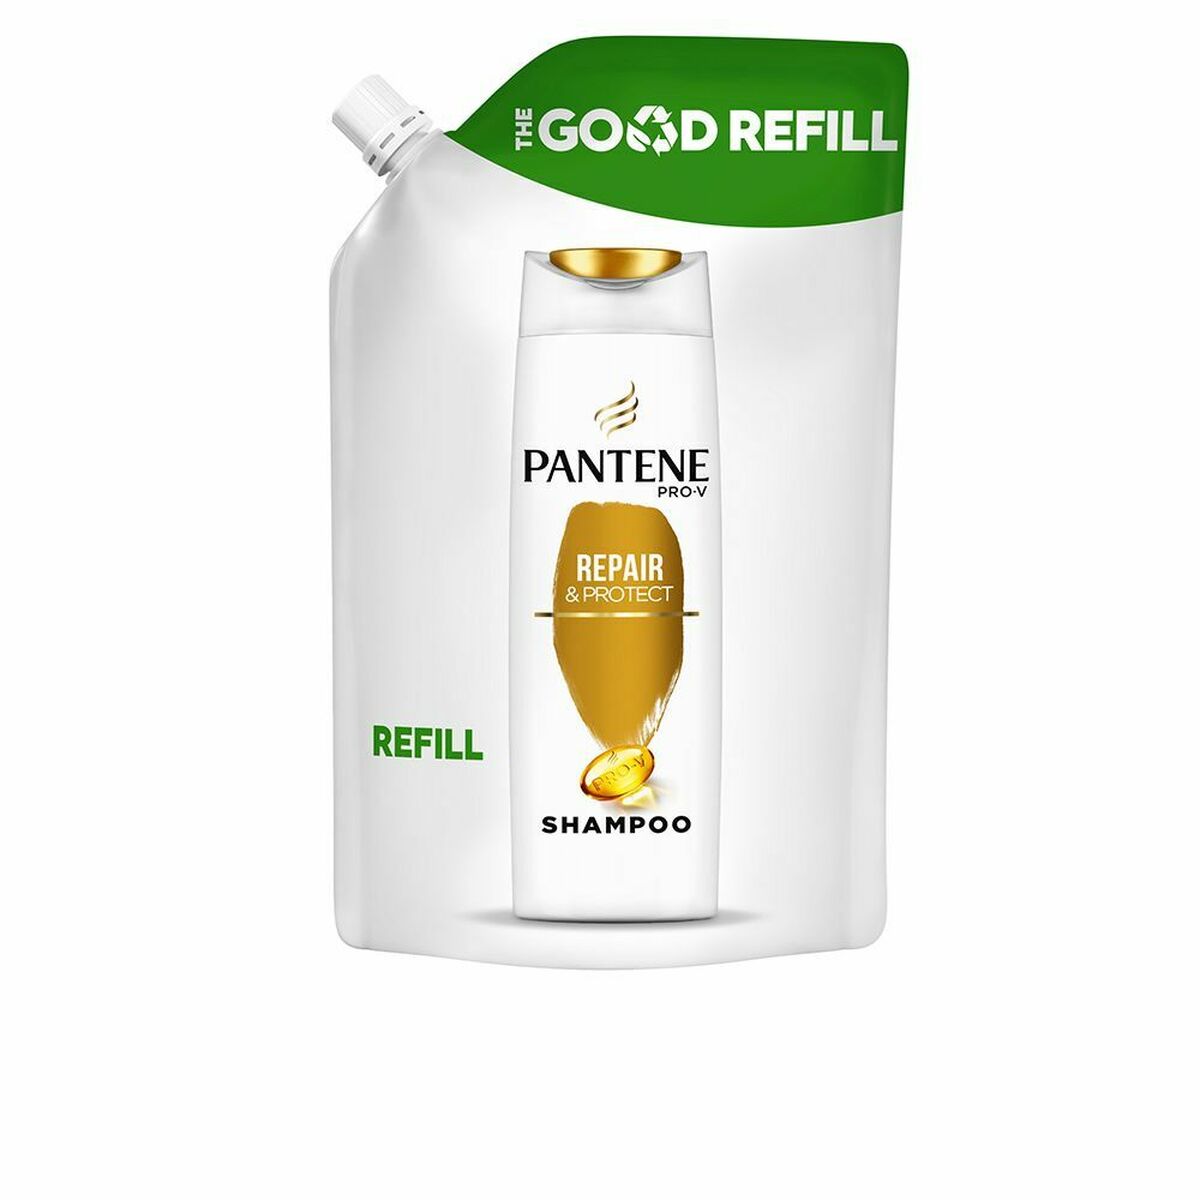 Shampoo Pantene Repair & Protect Good Refill (480 ml)